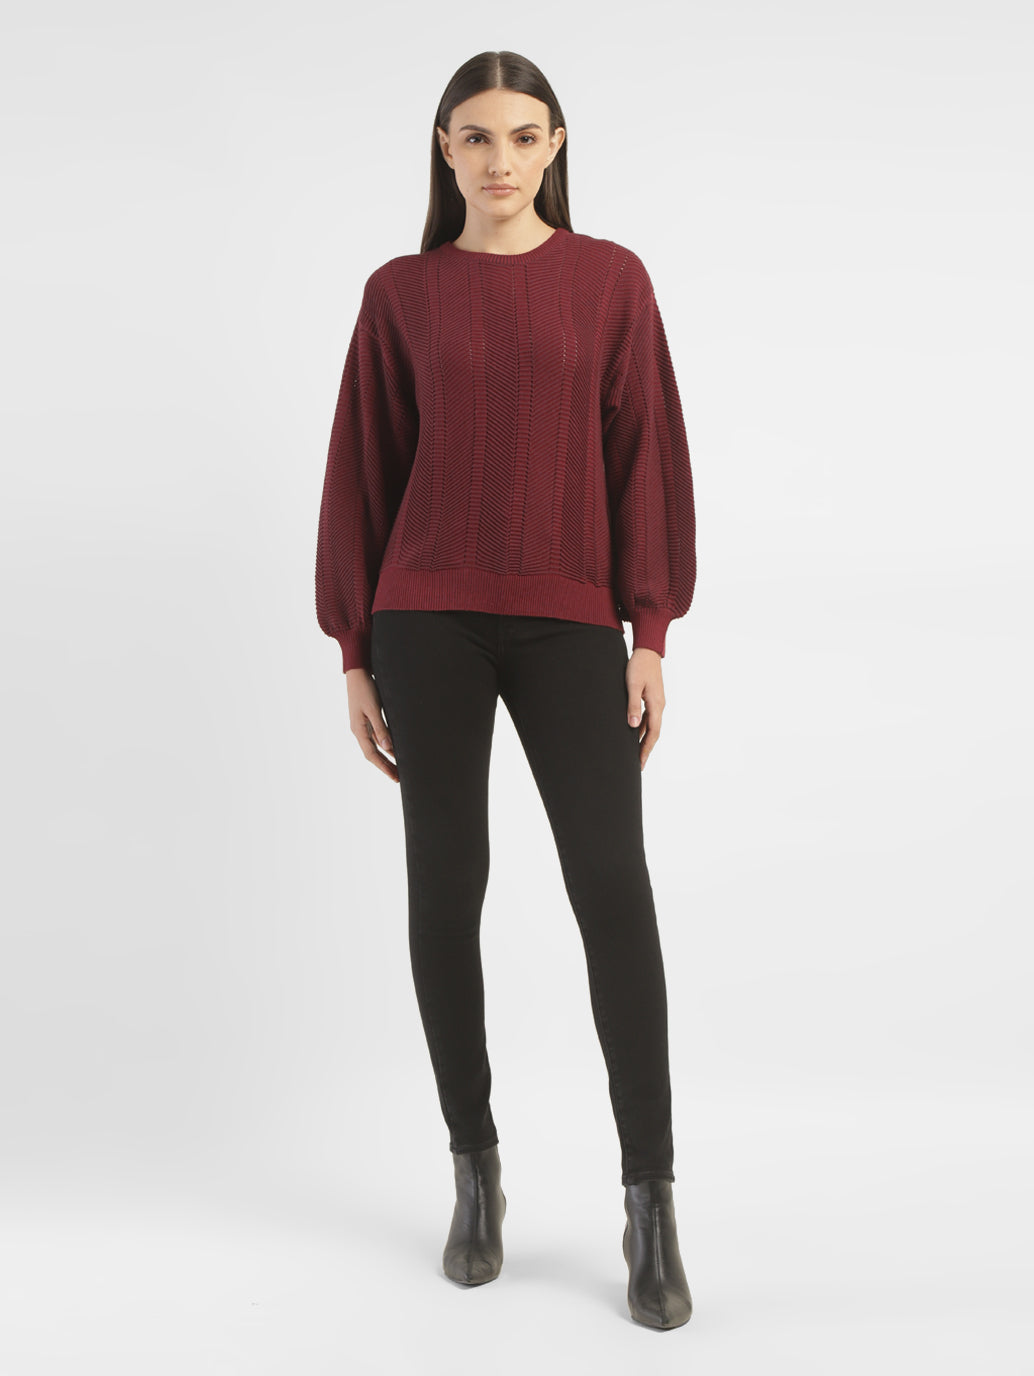 Women's Textured Red Crew Neck Sweater